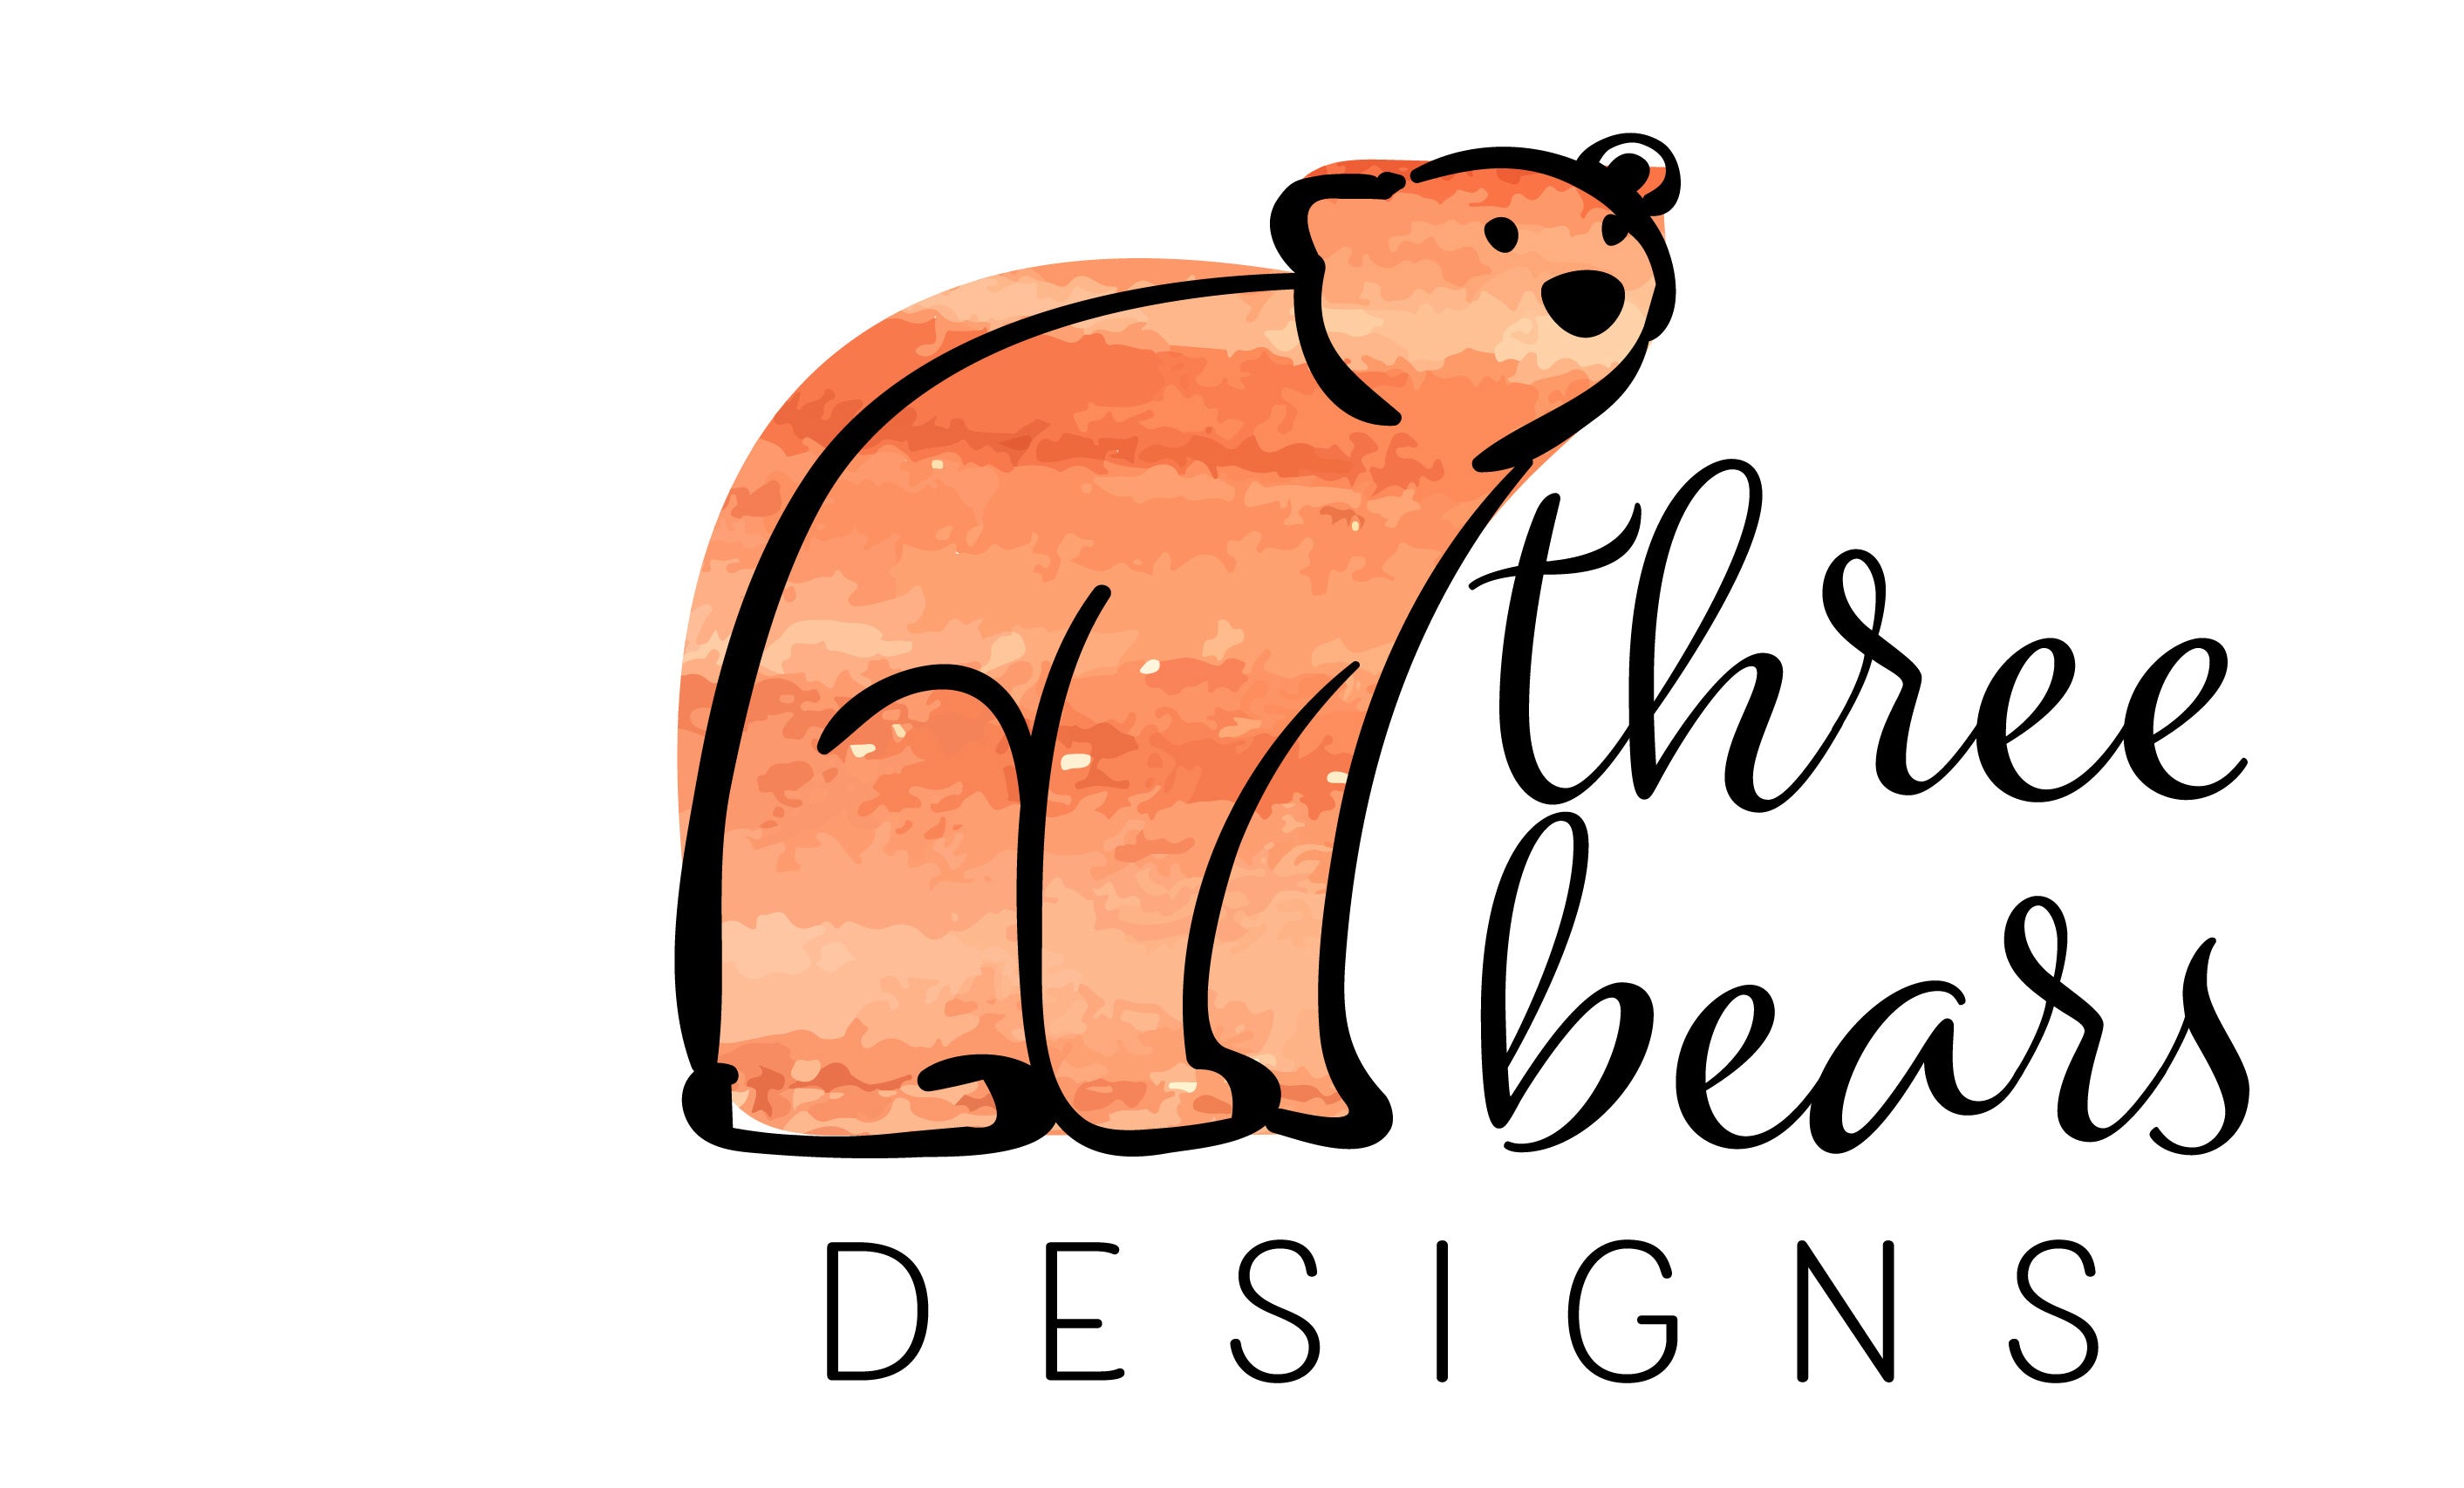 Three Bears Designs